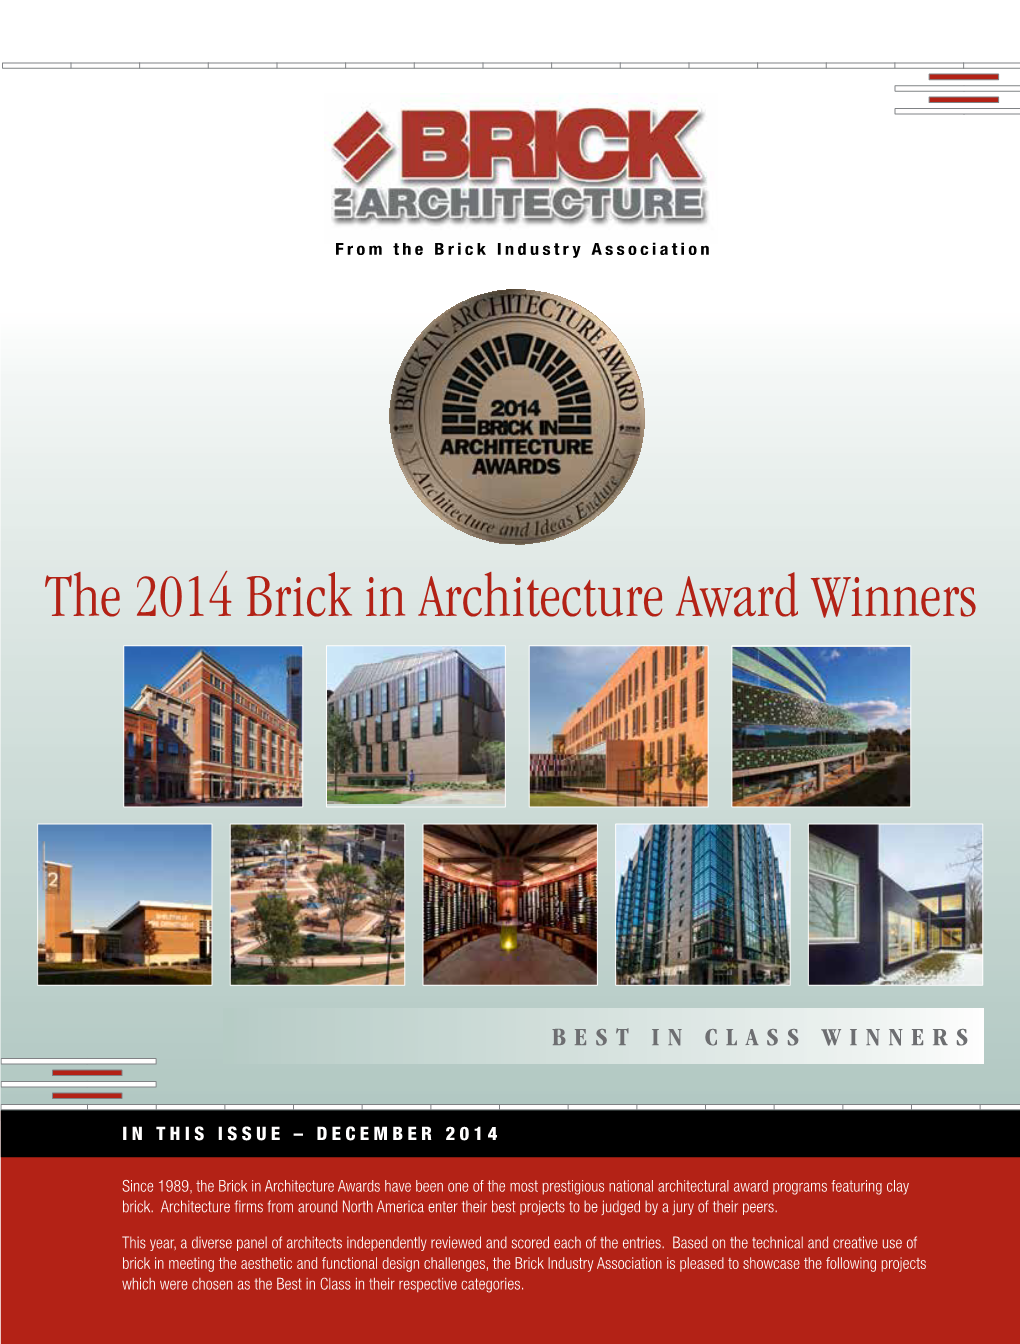 The 2014 Brick in Architecture Award Winners